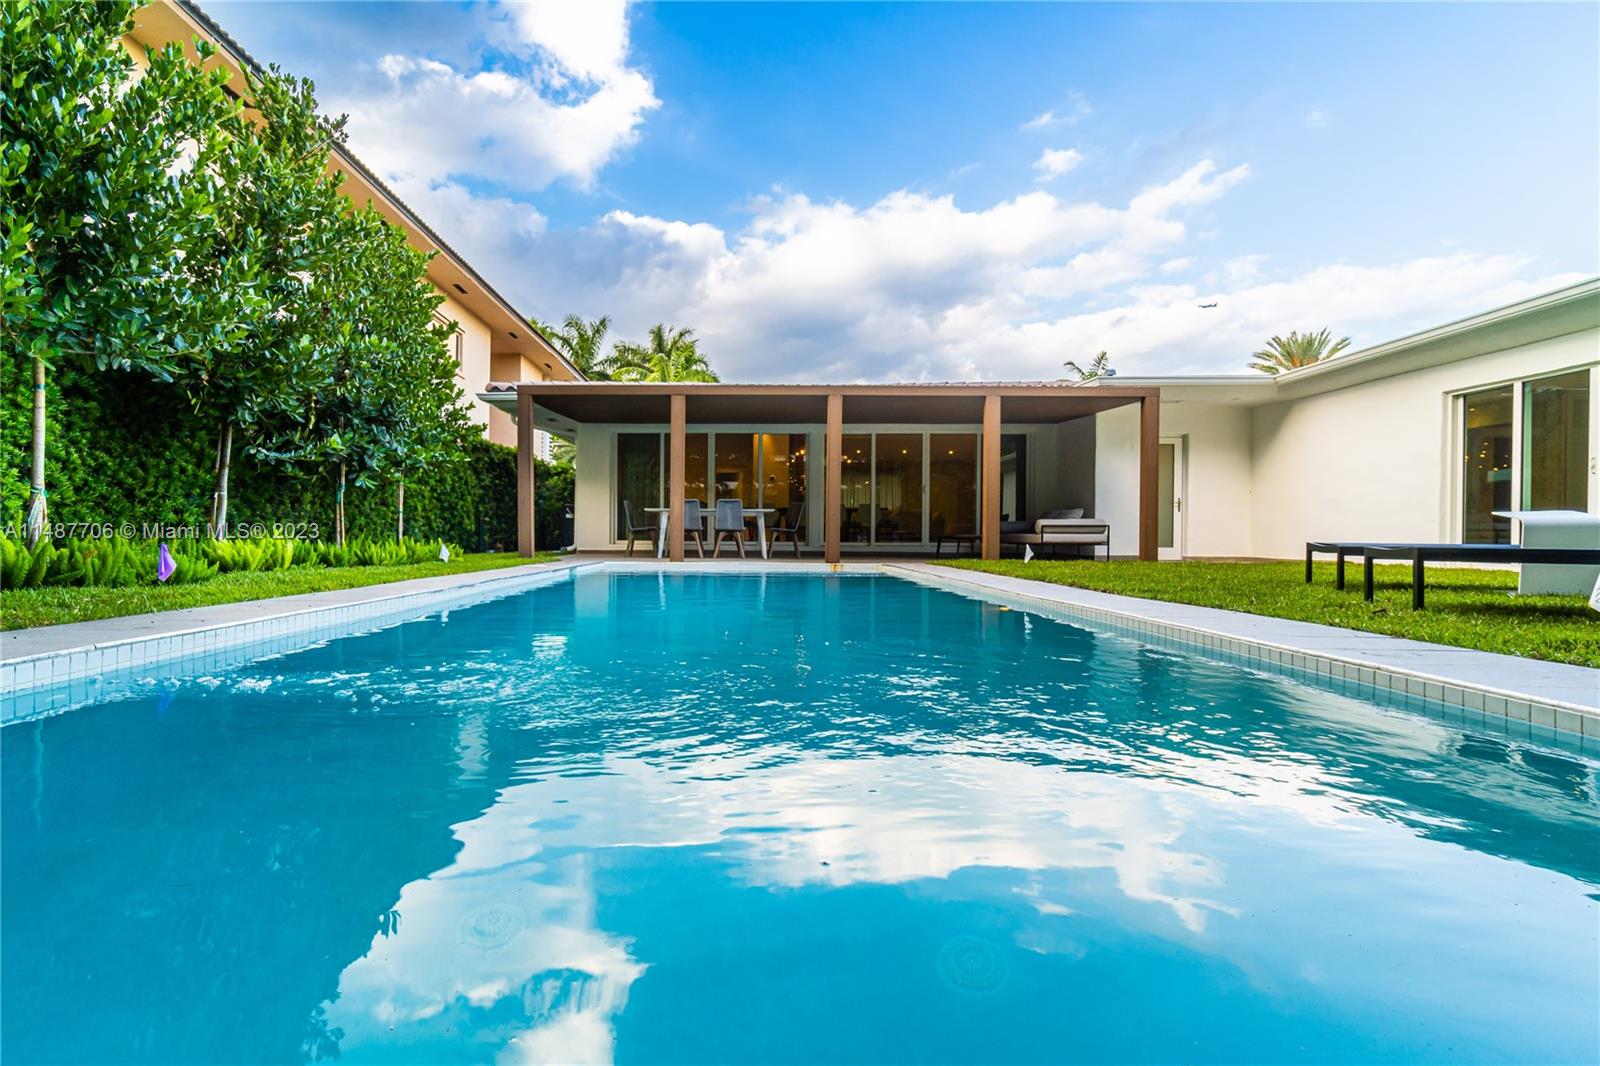 Property for Sale at 1030 N Venetian Dr, Miami, Broward County, Florida - Bedrooms: 3 
Bathrooms: 5  - $3,250,000